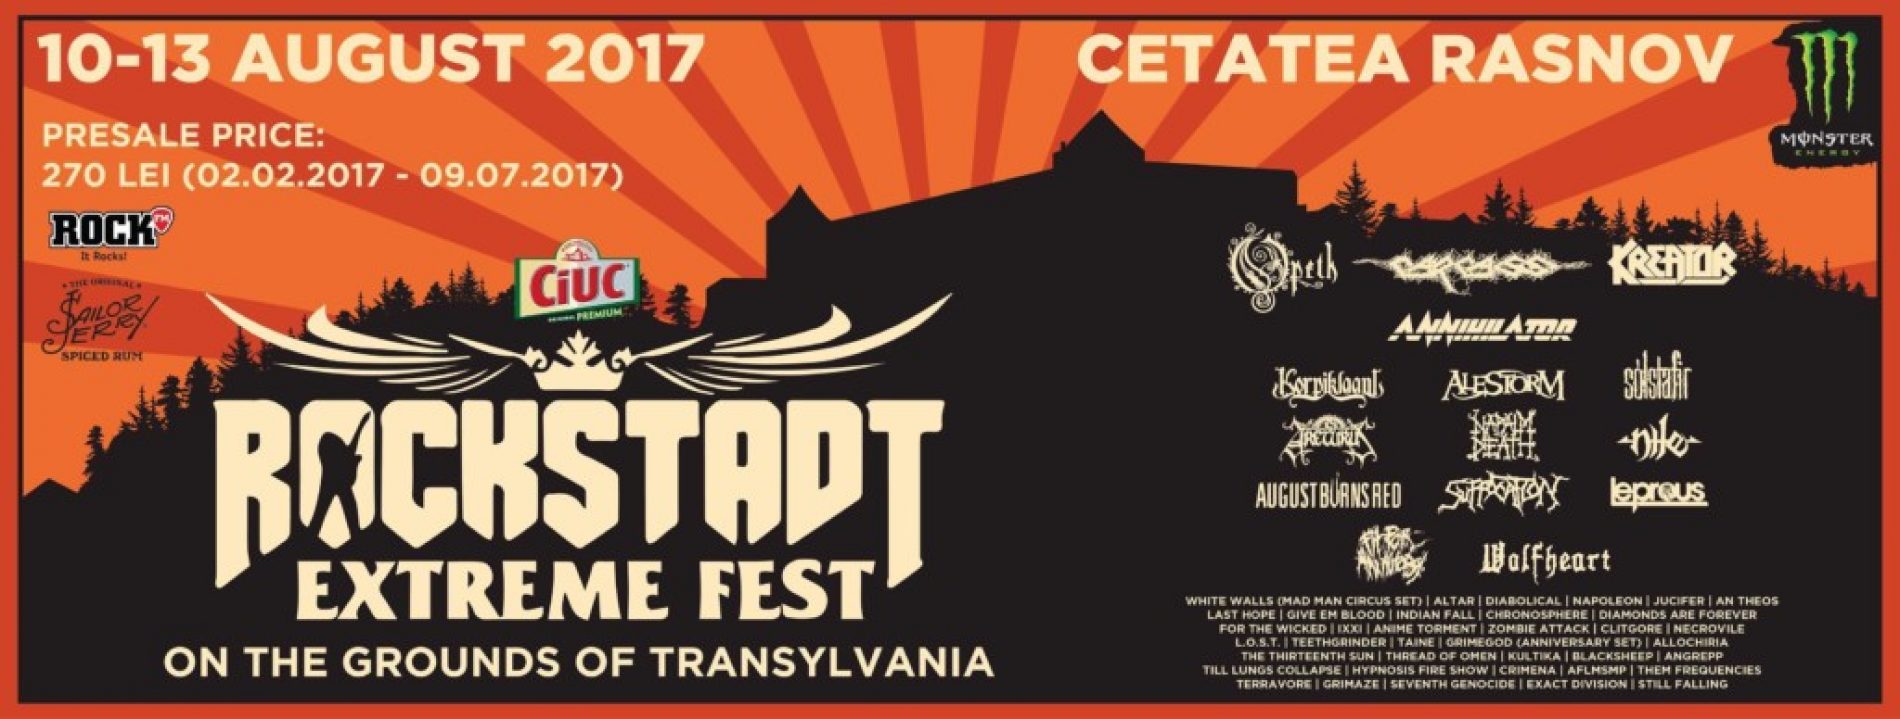 Rockstadt Extreme Fest 2017: cronica de concert (ziua 4) si concluzii